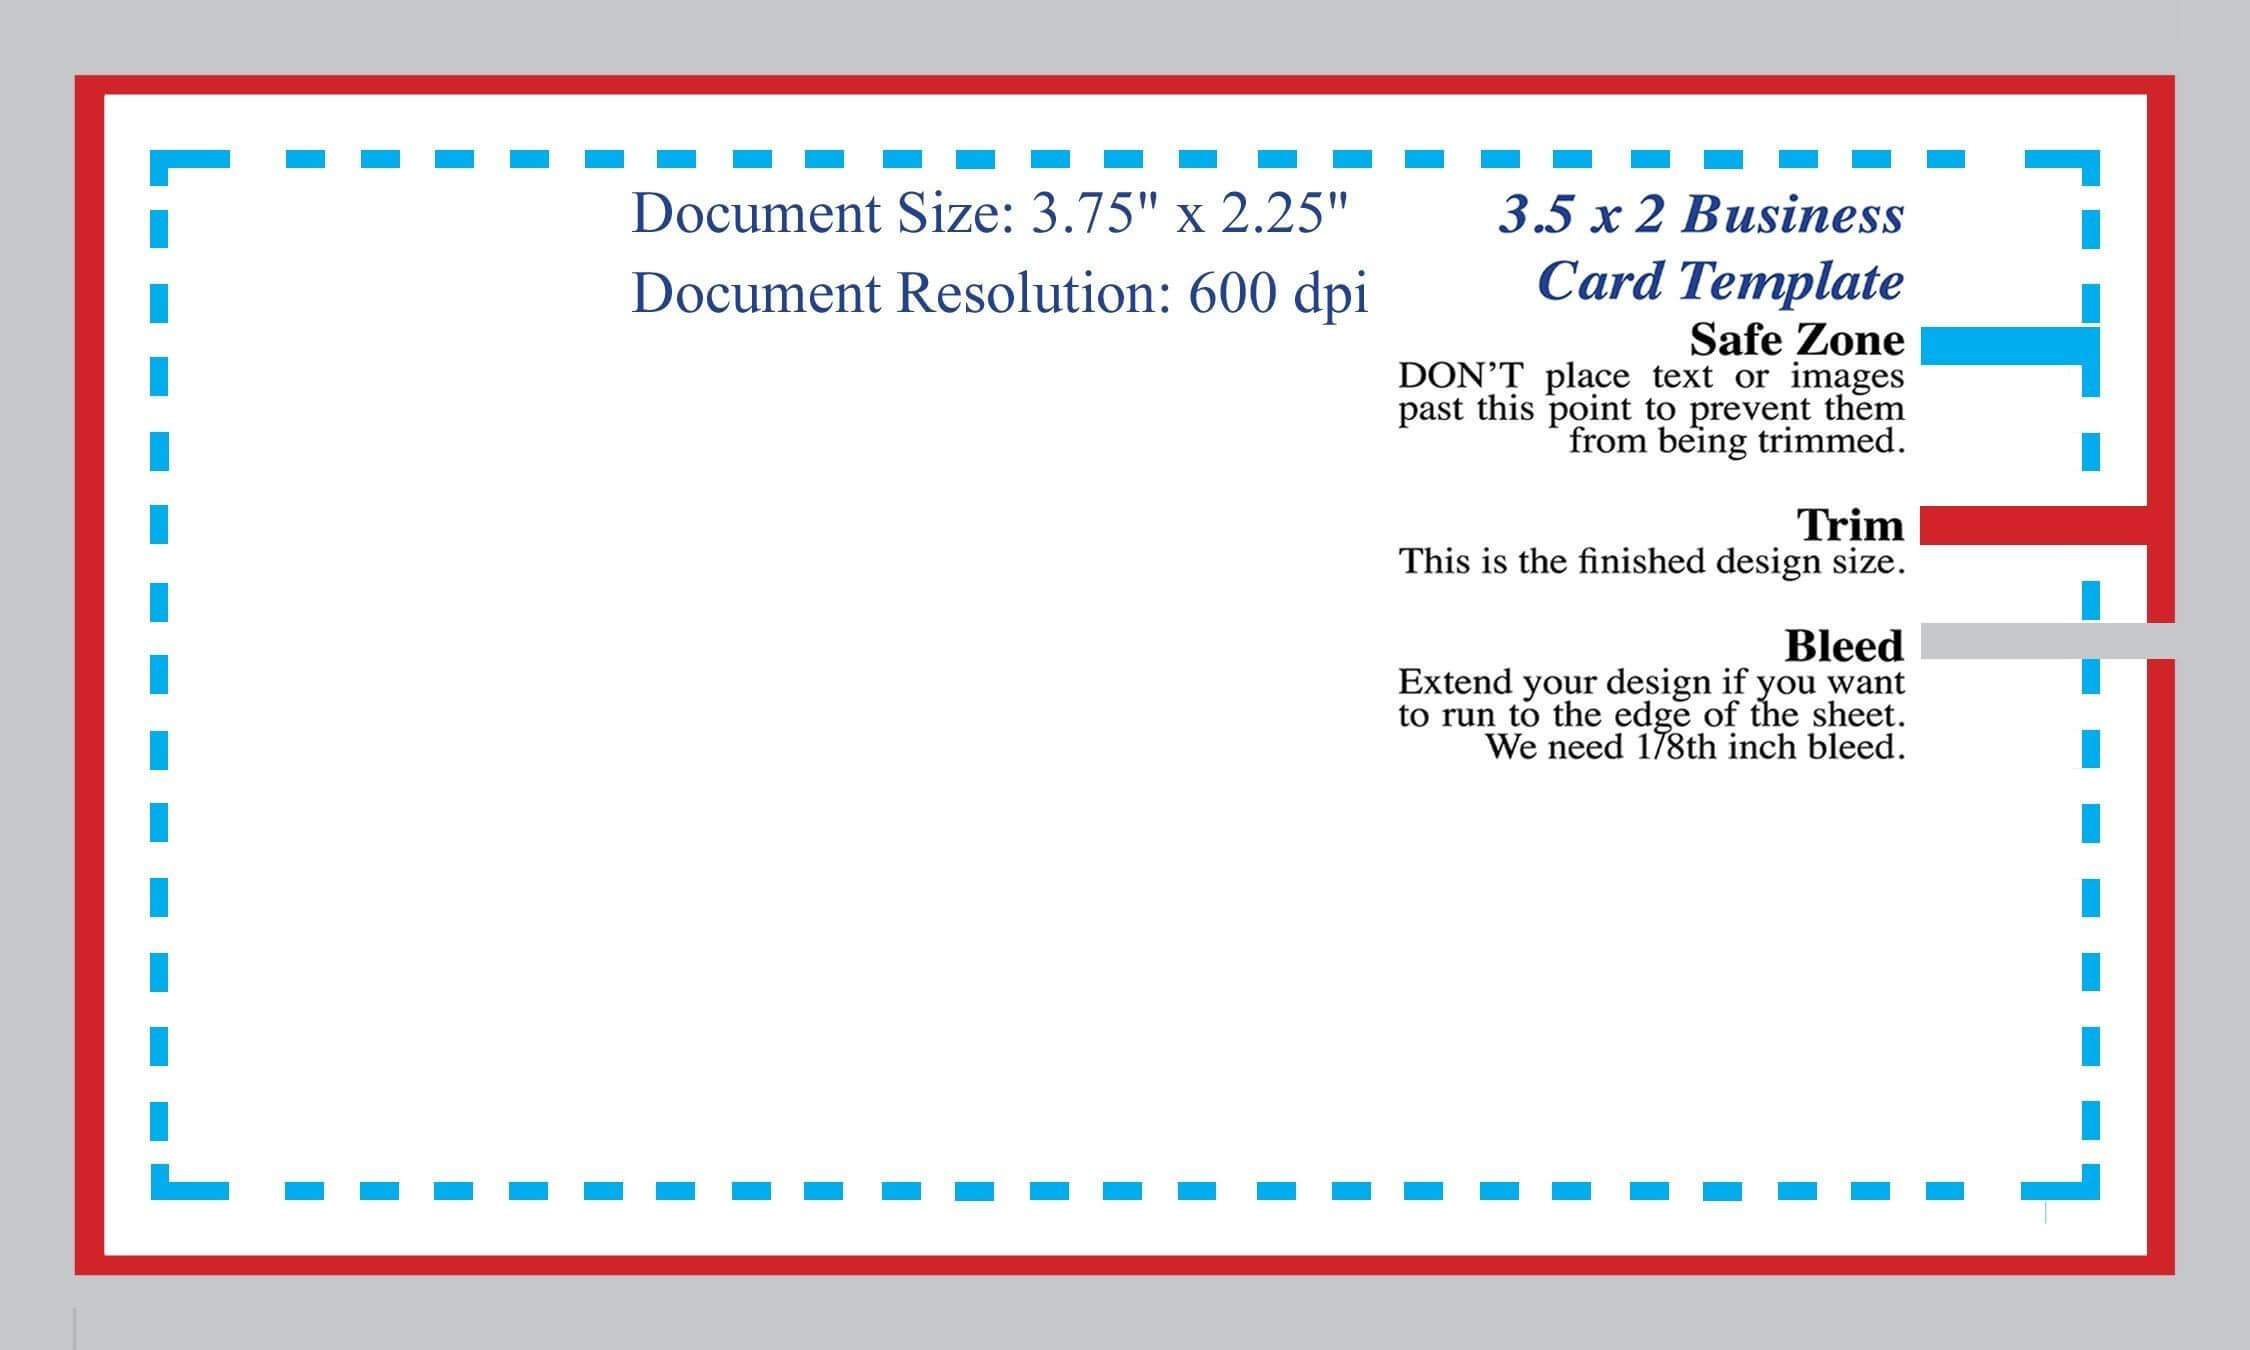 007 Bcard1 Blank Business Card Template Photoshop Free Throughout Business Card Size Template Photoshop